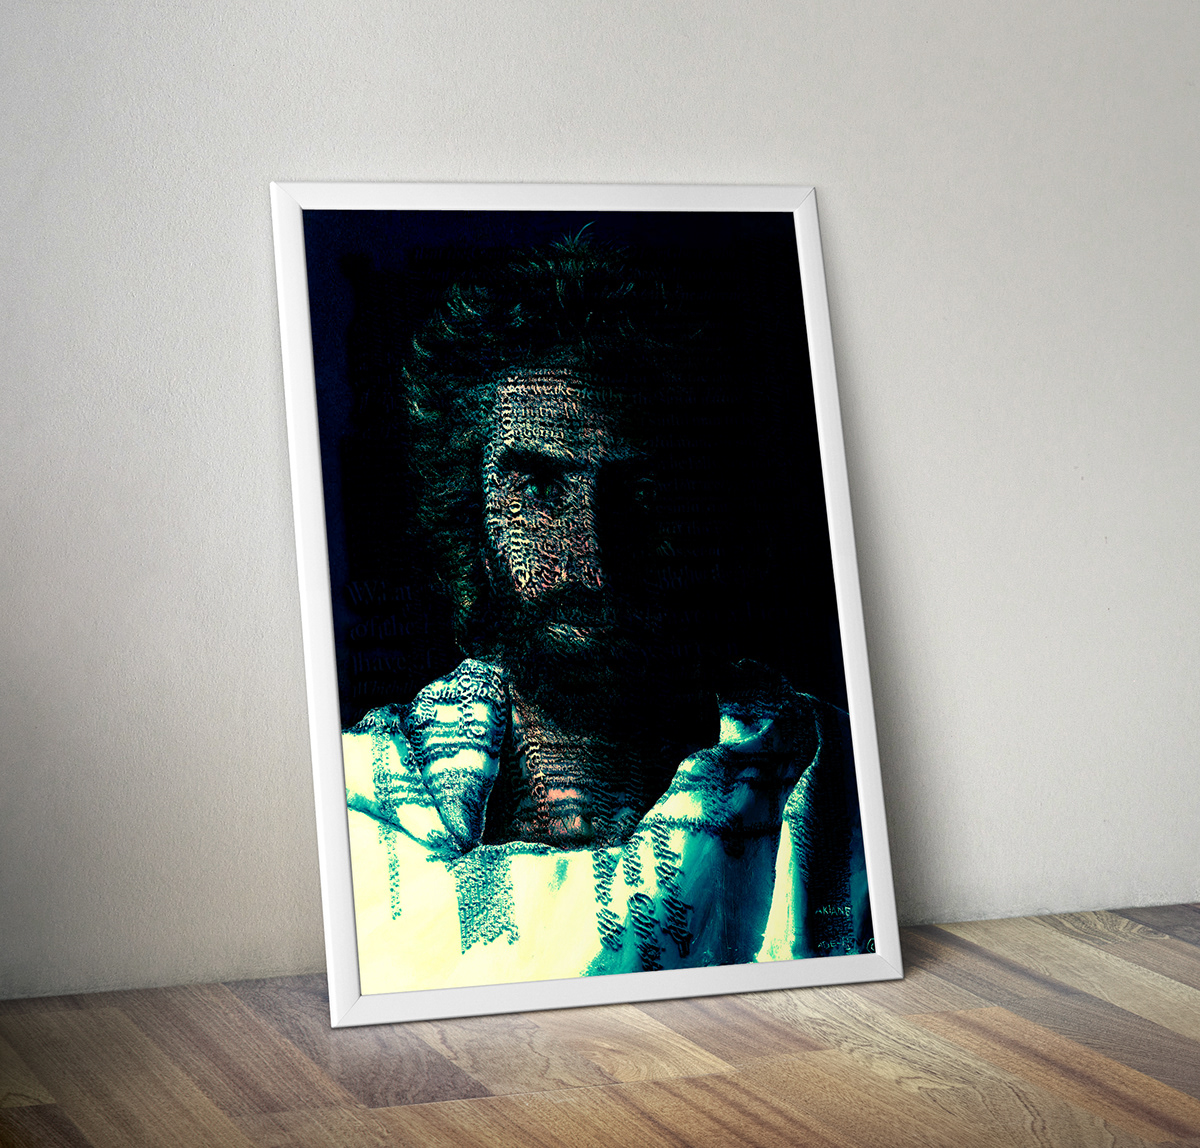 #JesusChrist #Bible  #Word #BreathofLife #PortraitTypography